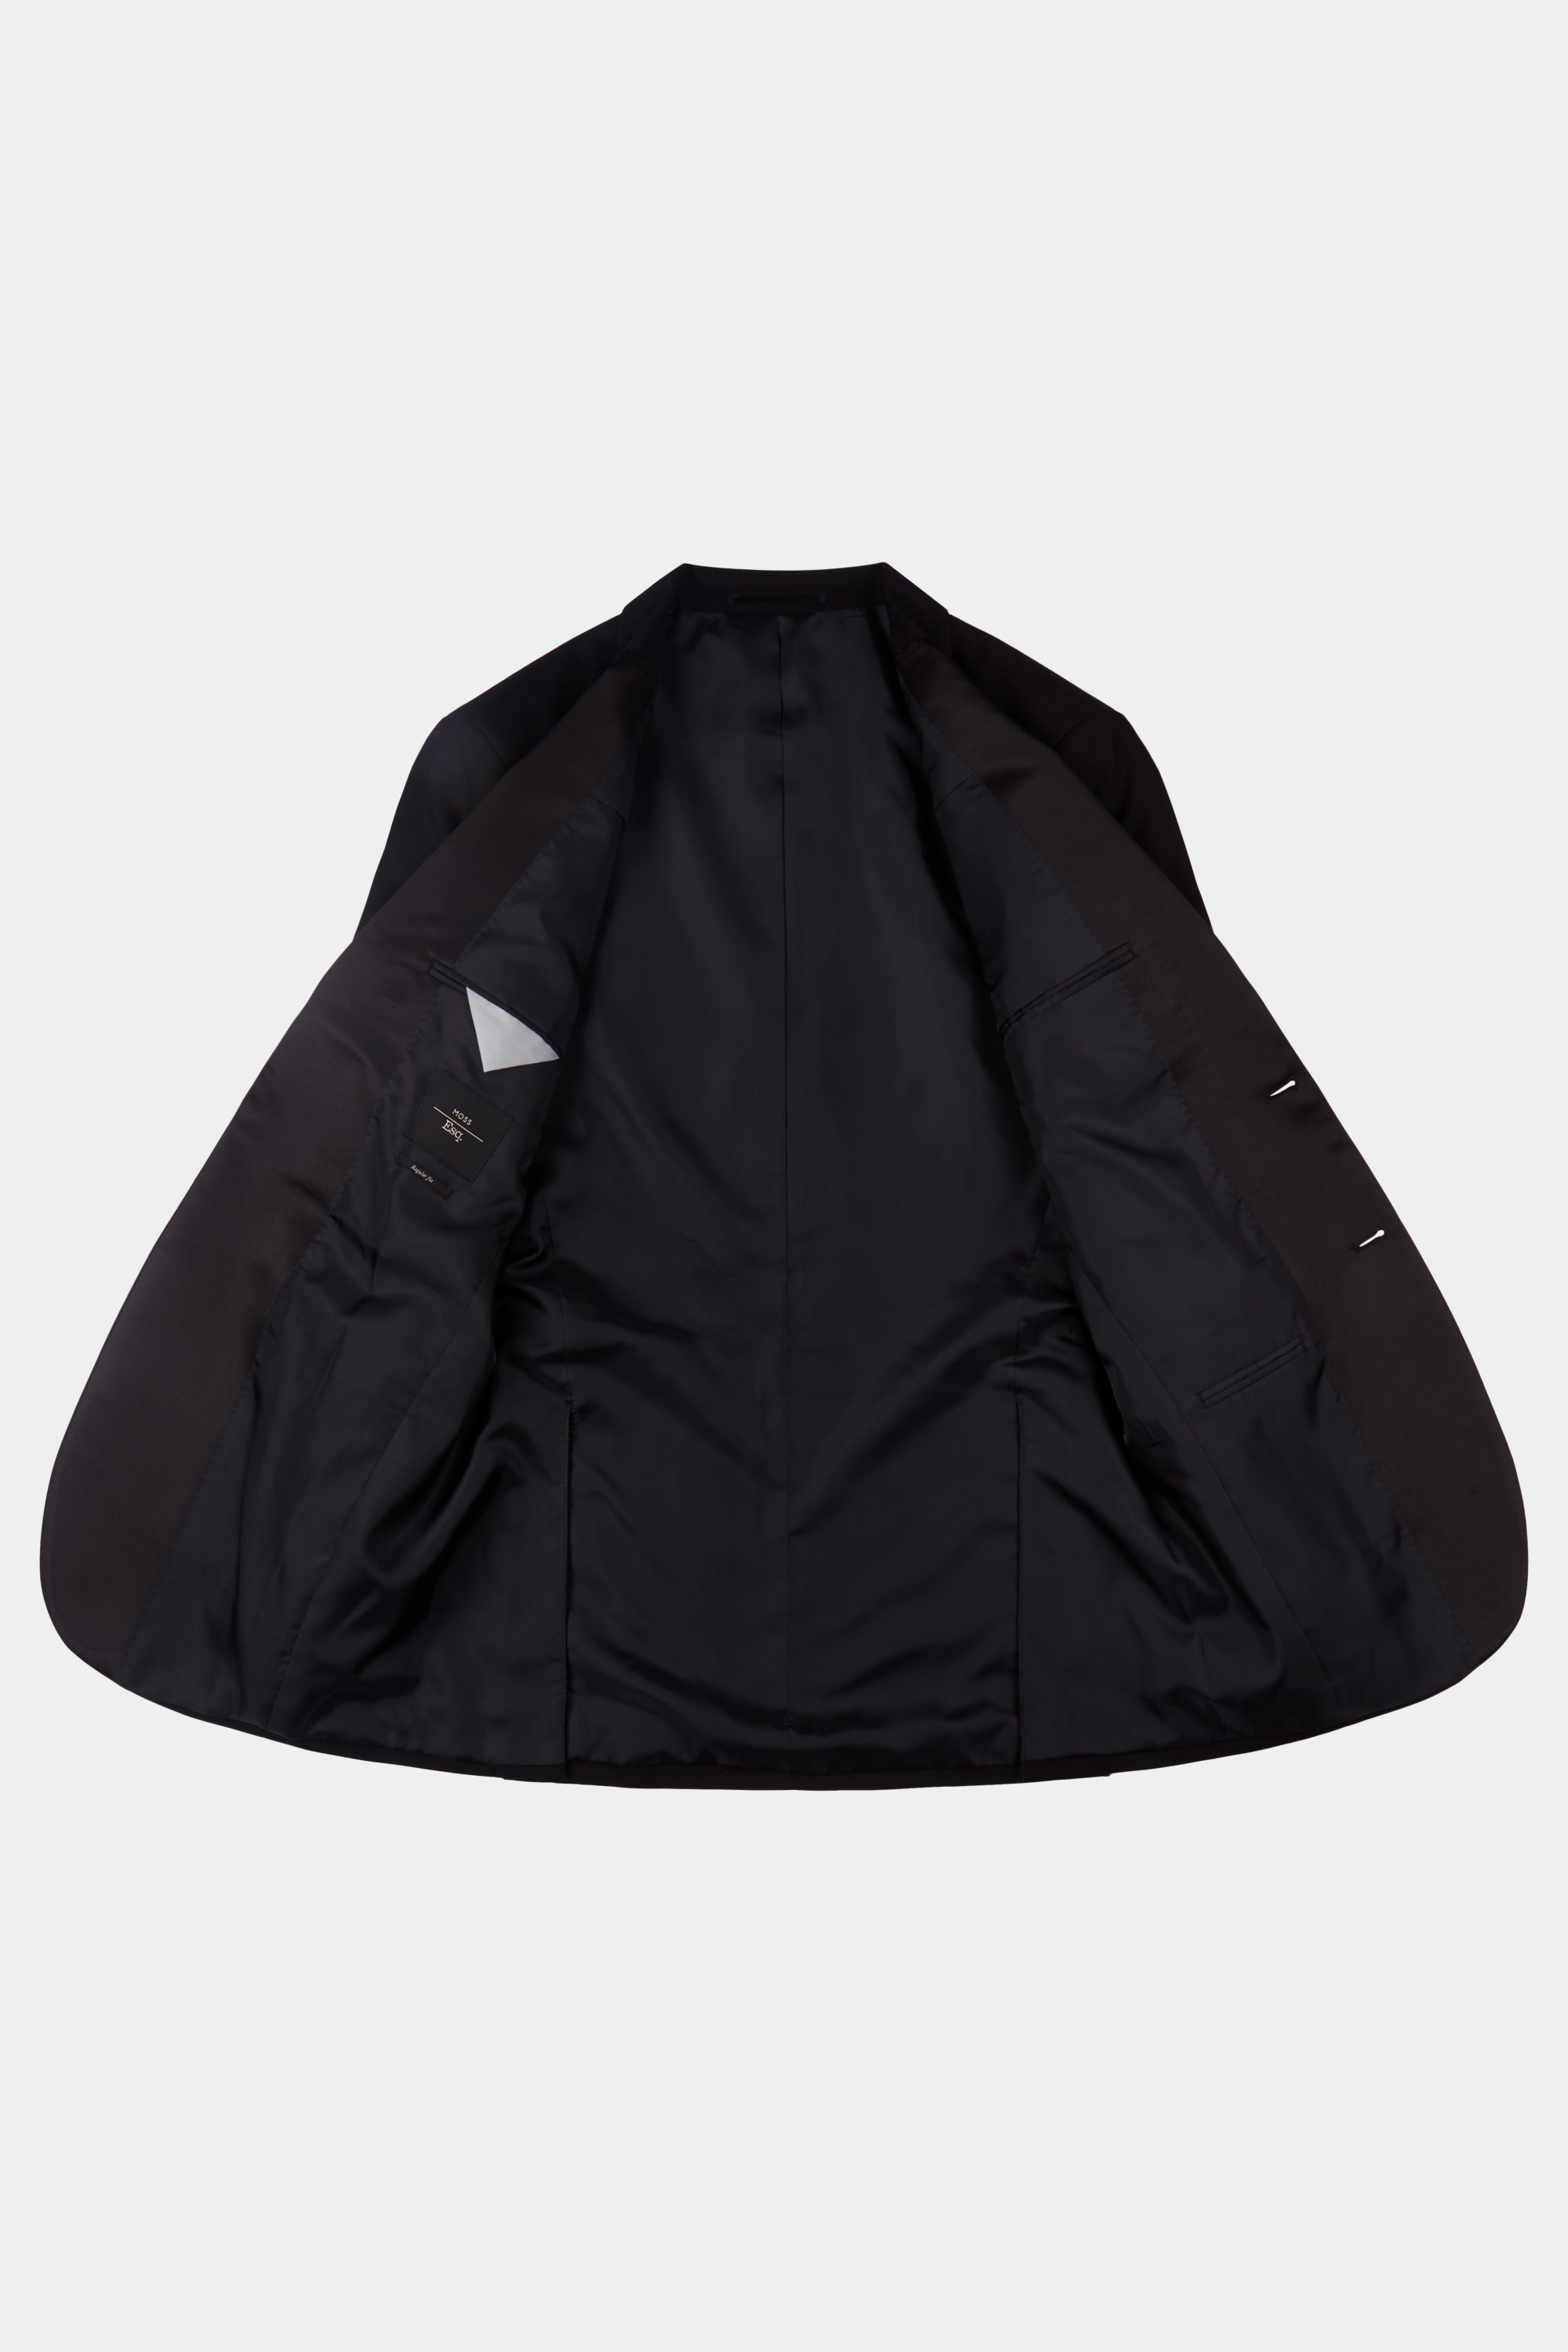 Regular Fit Black Tuxedo Jacket | Buy Online at Moss